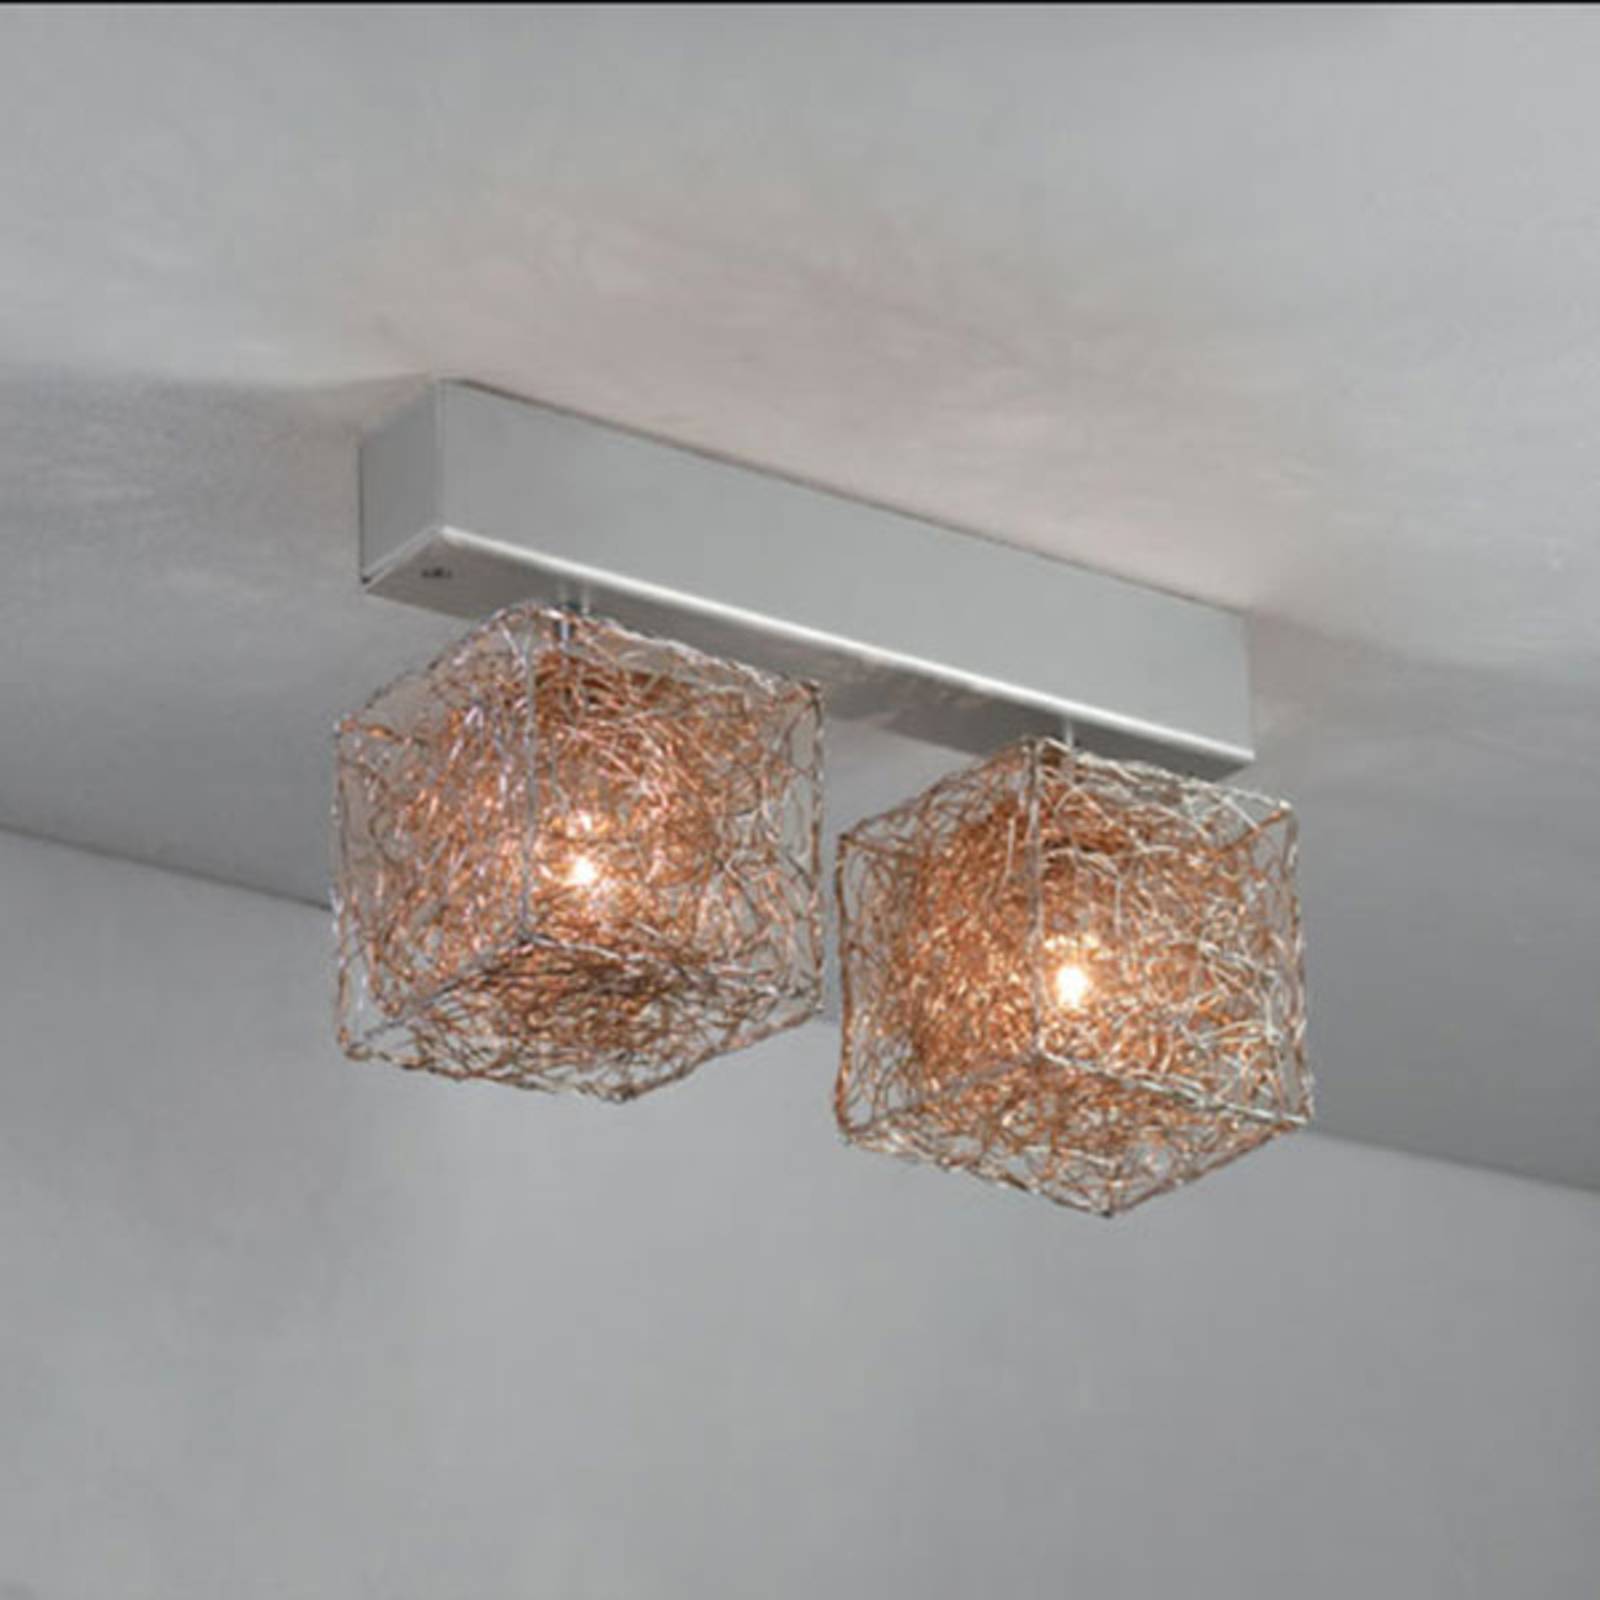 Knikerboker Kubini - plafonnier LED de designer